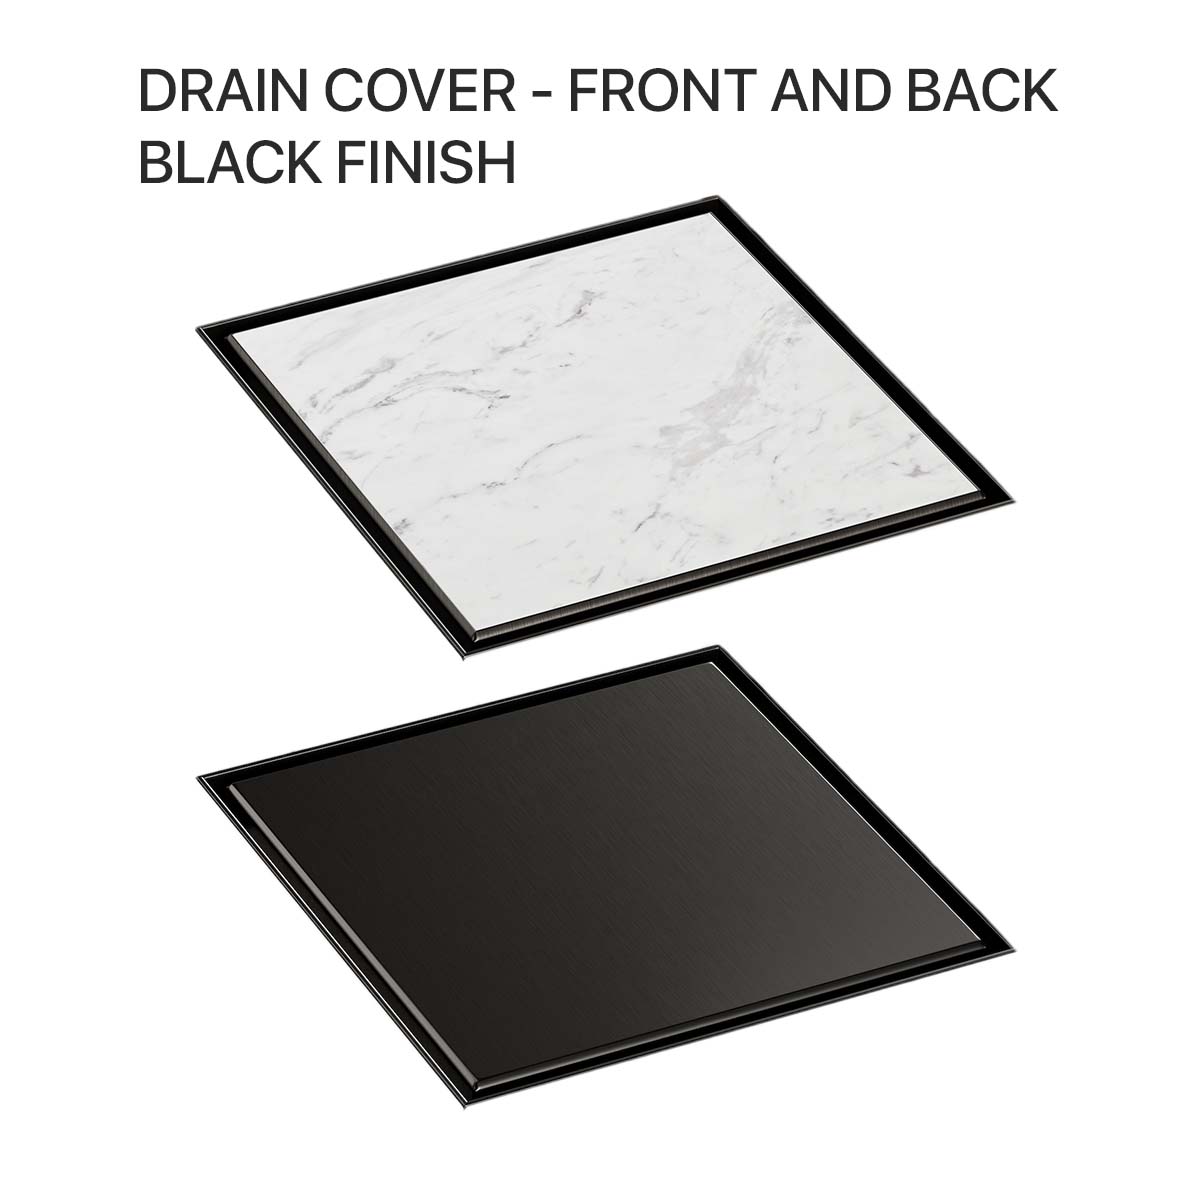 sharpdrain square drain covers black